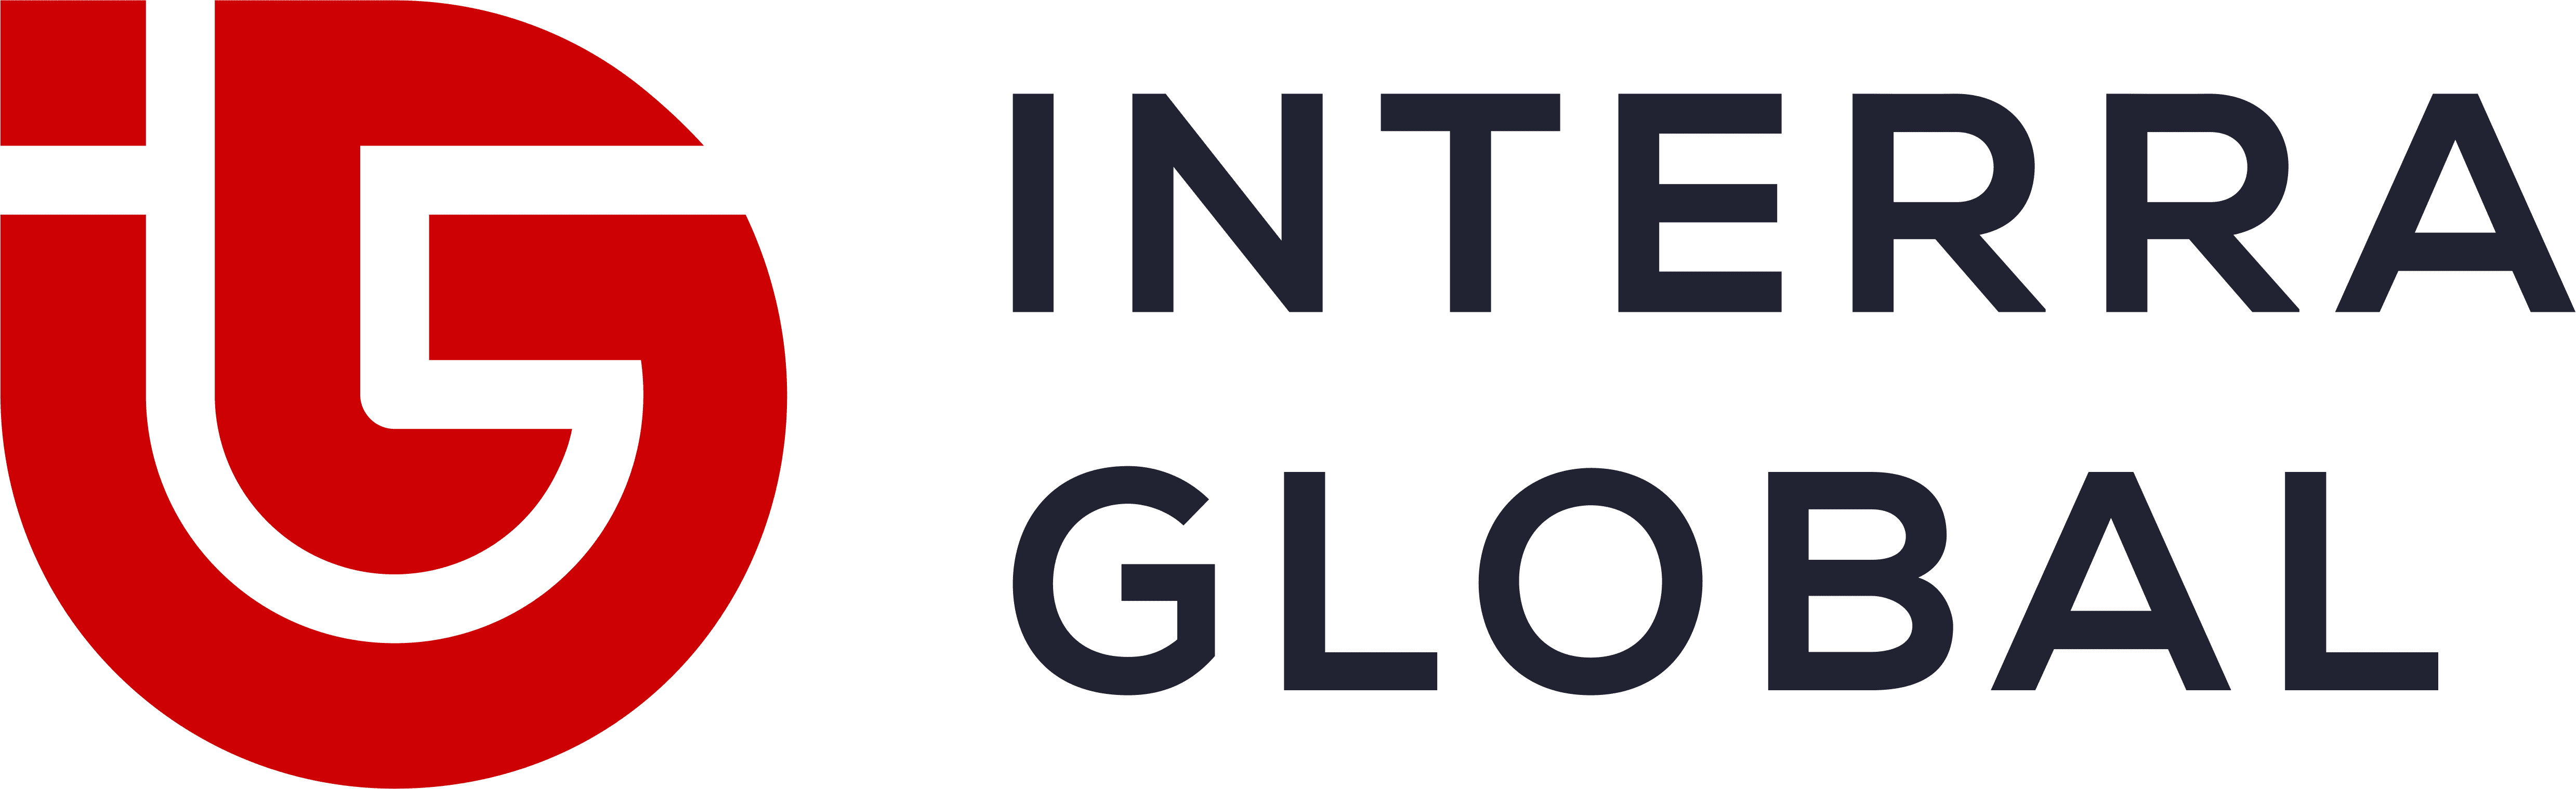 Interra Global Corporation